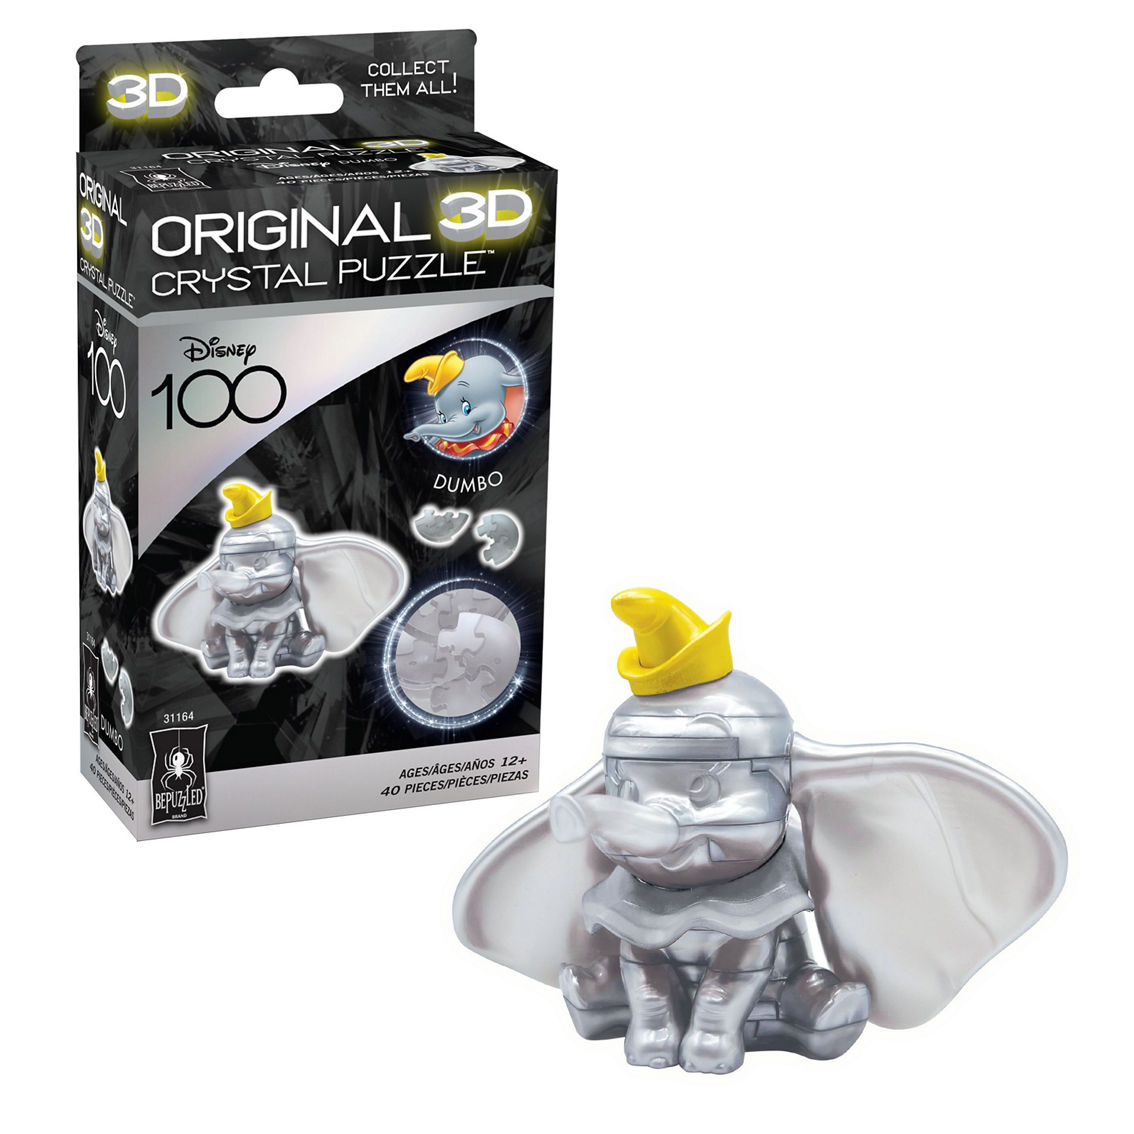 BePuzzled 3D Crystal Puzzle - Disney 100 Platinum Edition - Dumbo: 40 Pcs - Image 4 of 5